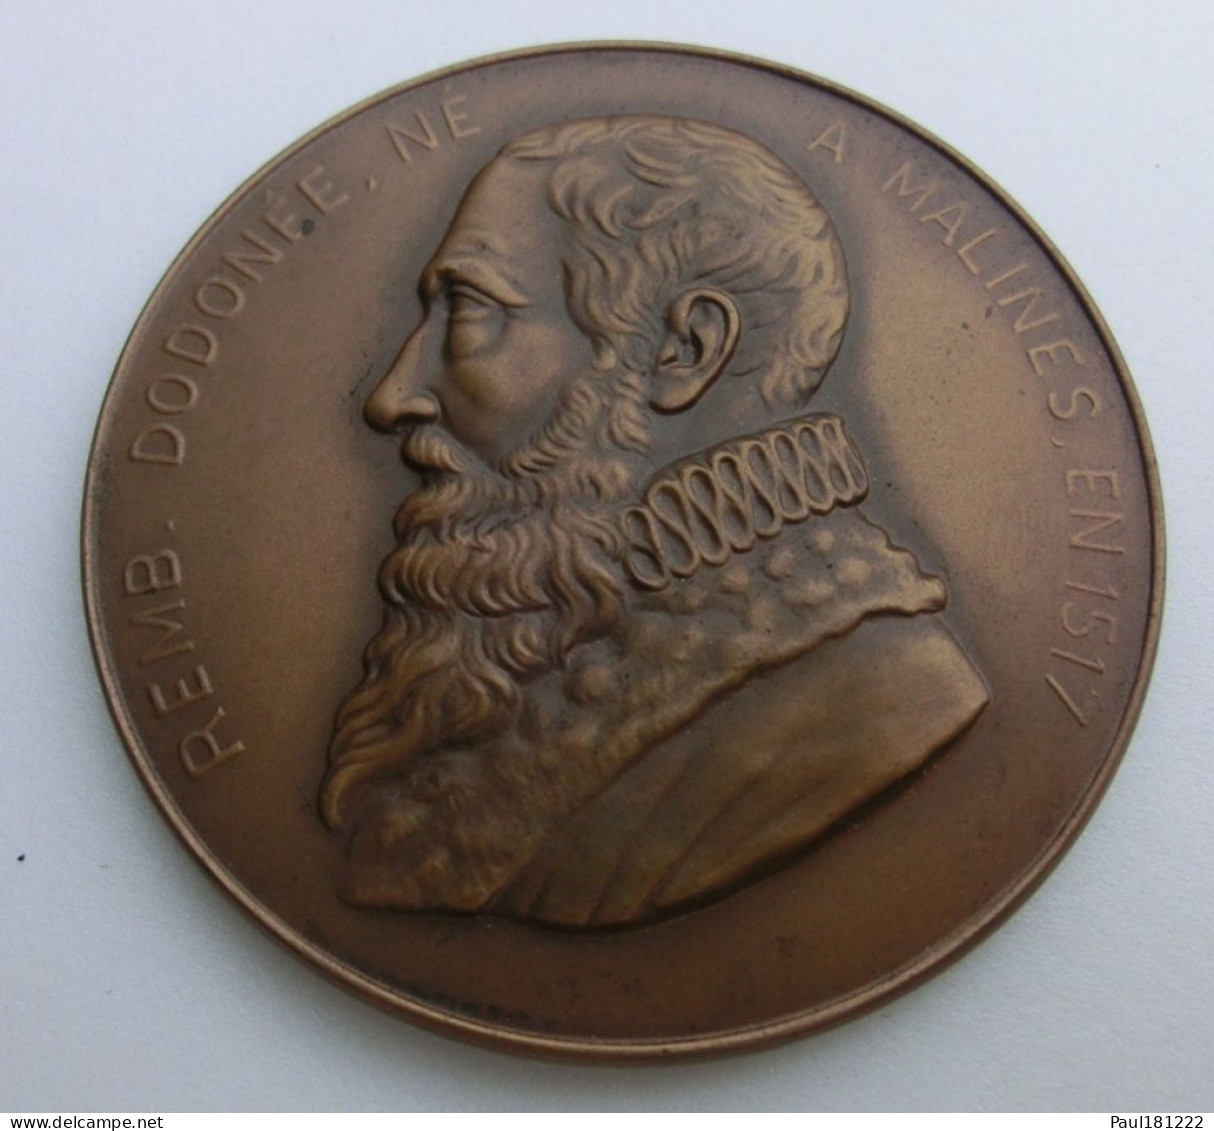 Médaille, Bronze, Rembert Dodonée, Dodoens, Van Joenckema, Malines, 1517, Congrès National Des Sciences Bruxelles 1950 - Unternehmen